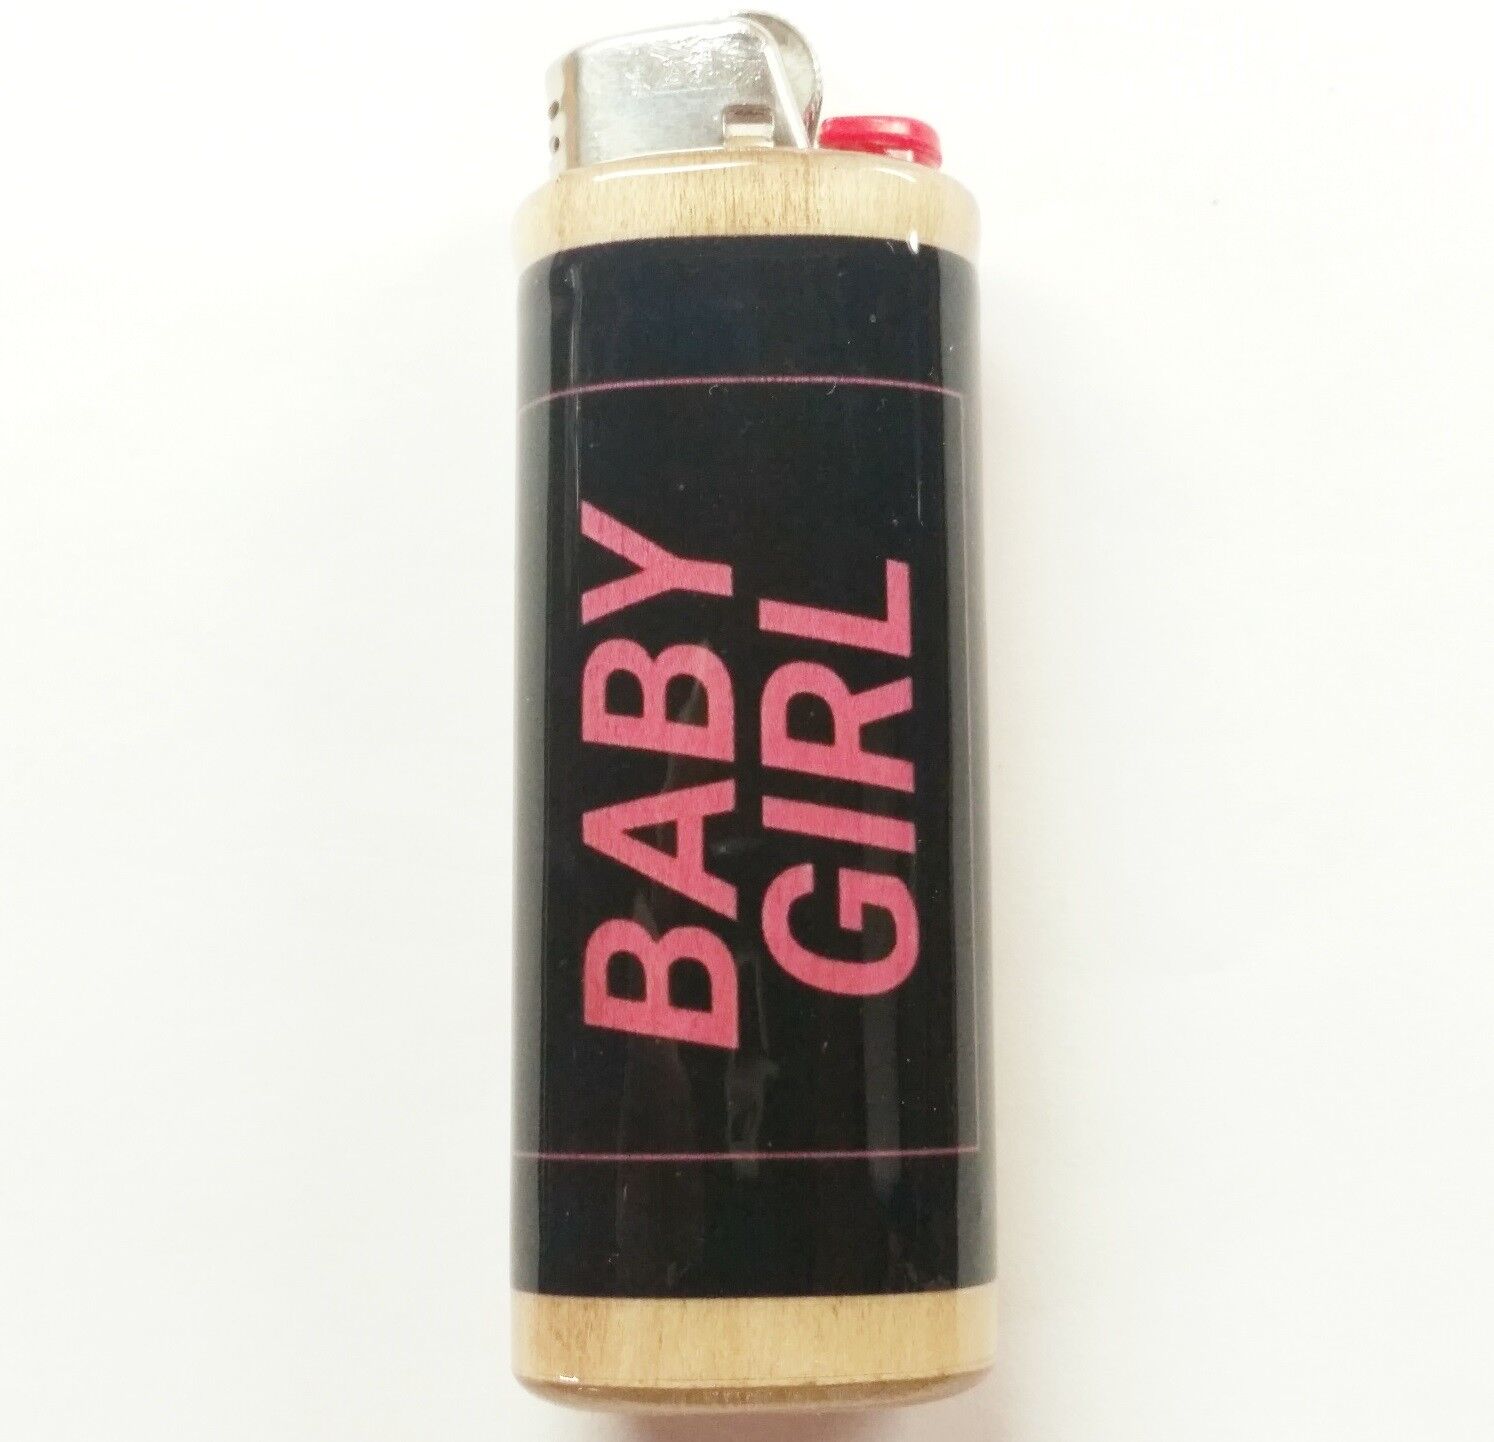 Baby Girl Lighter Case Holder Sleeve Cover Fits Bic Lighters